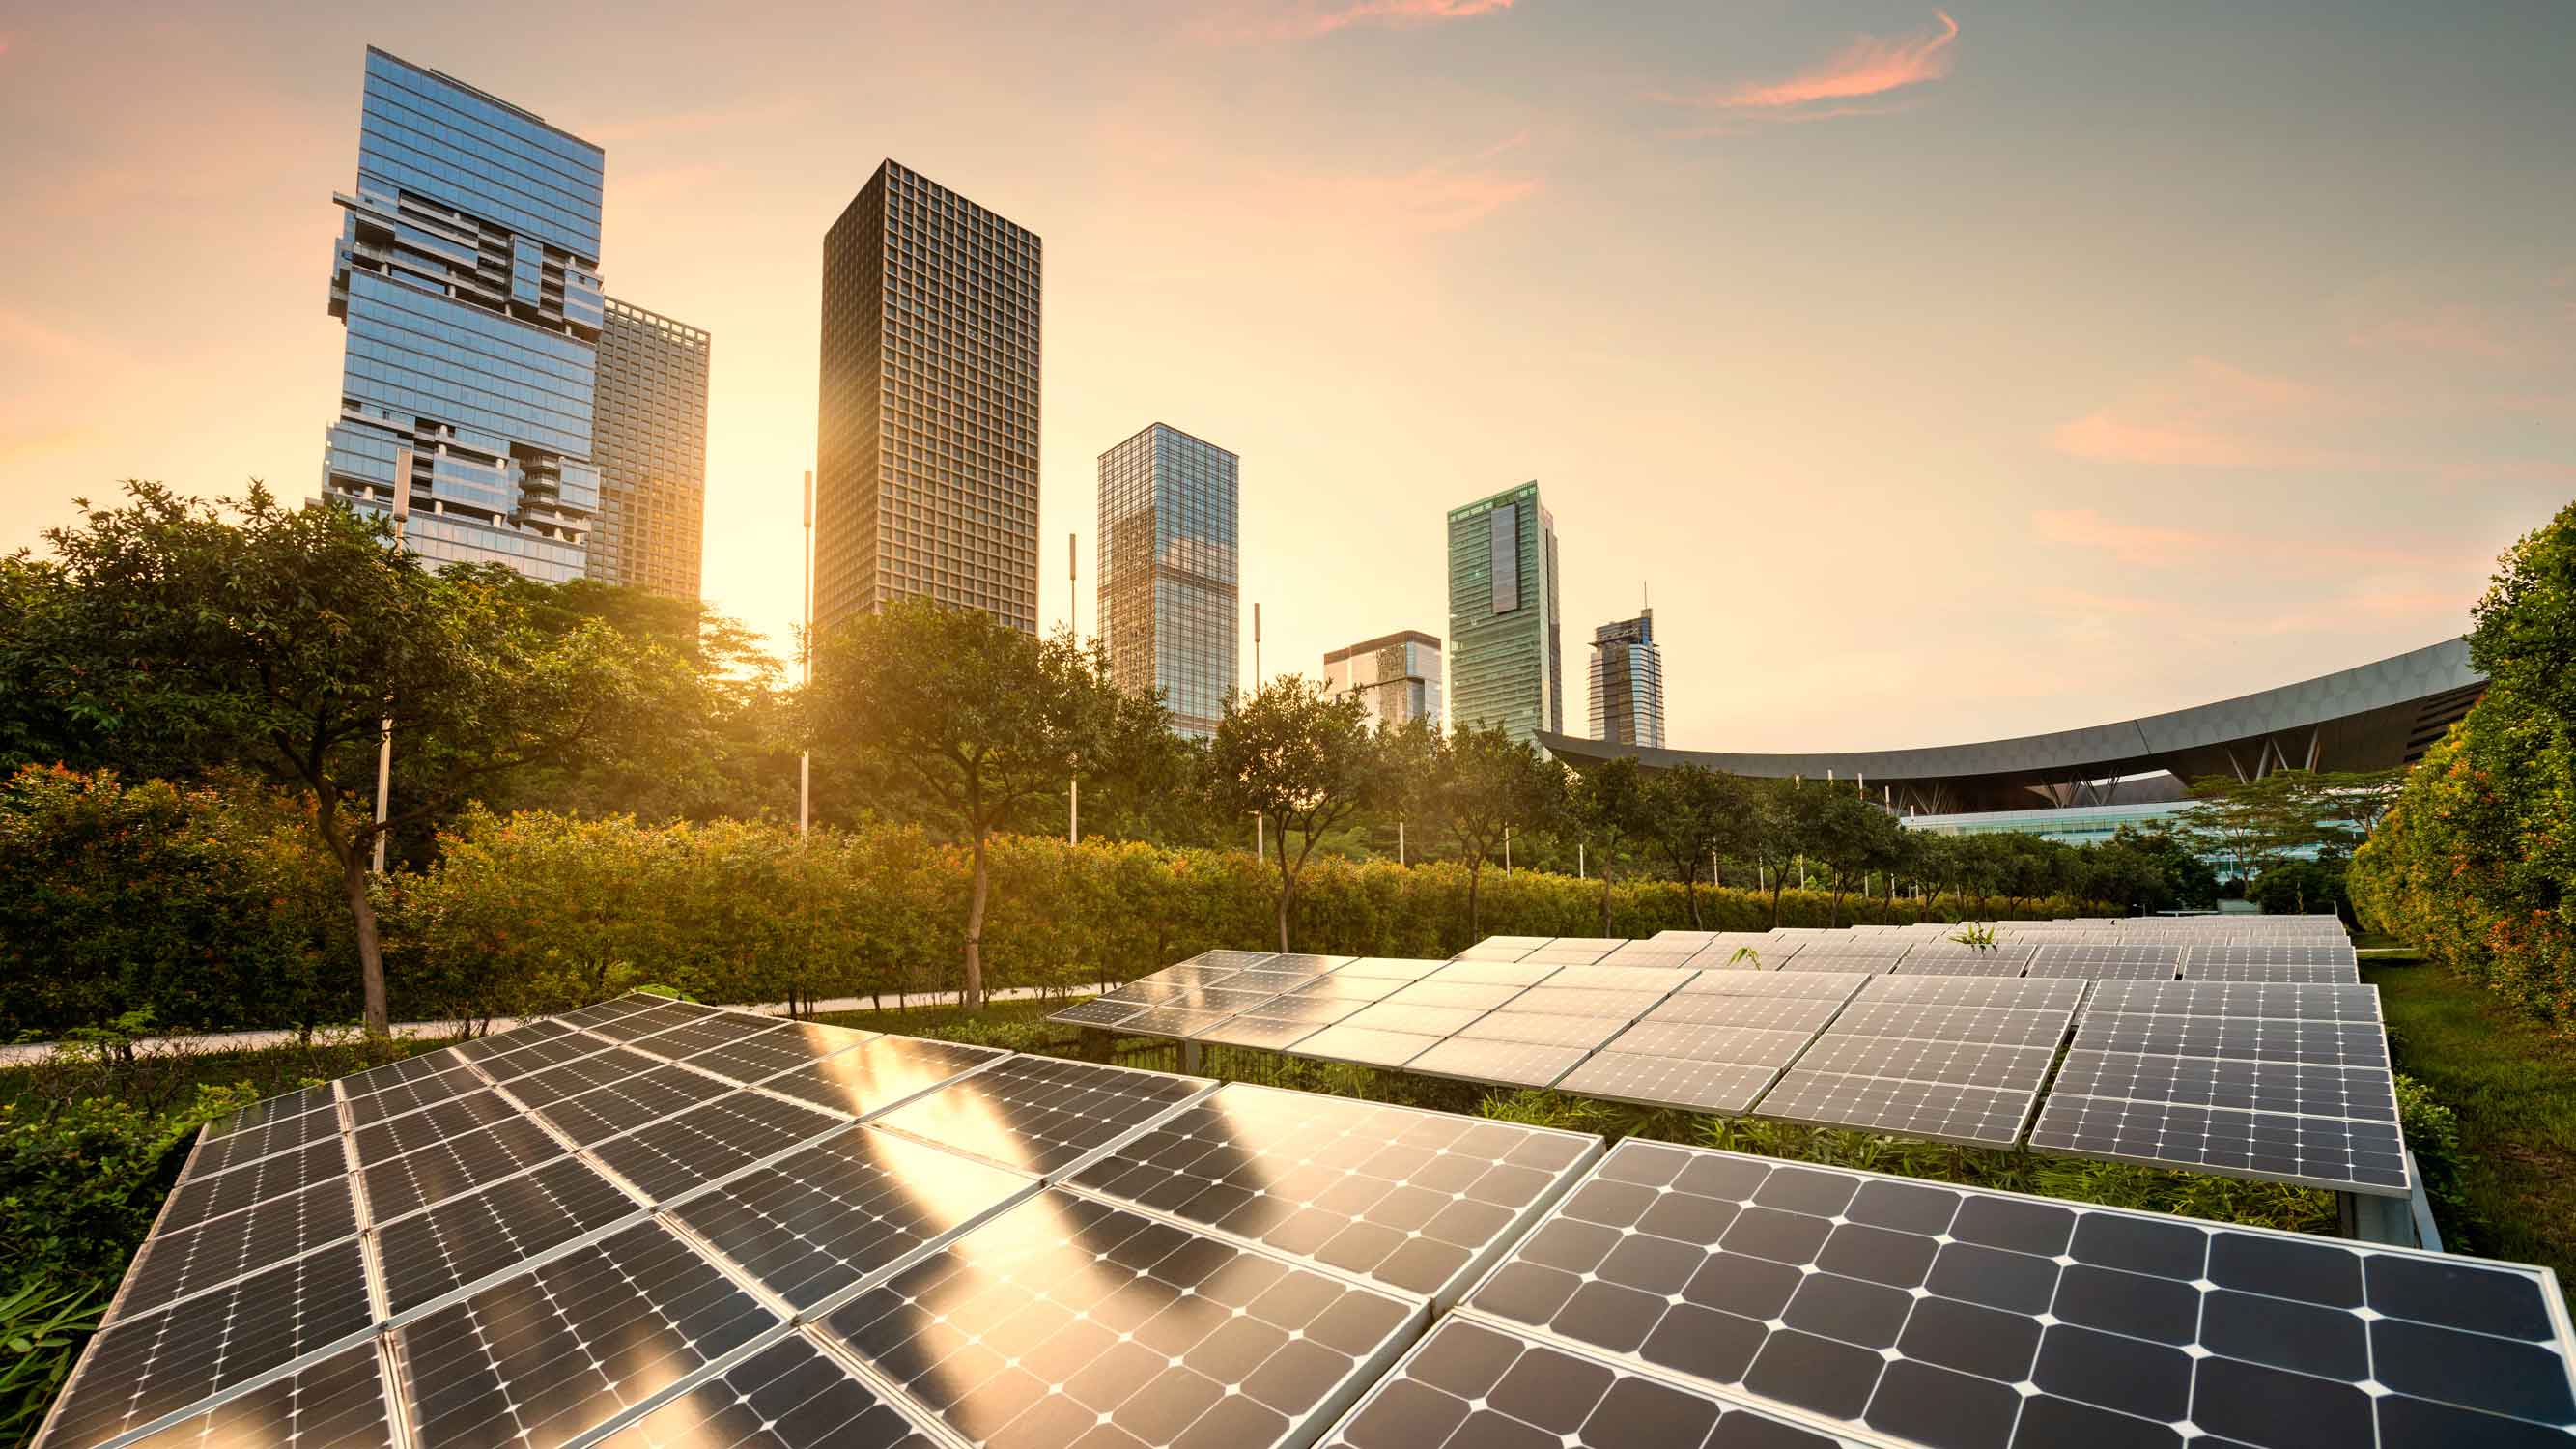 Solar panels generating clean energy in an urban environment